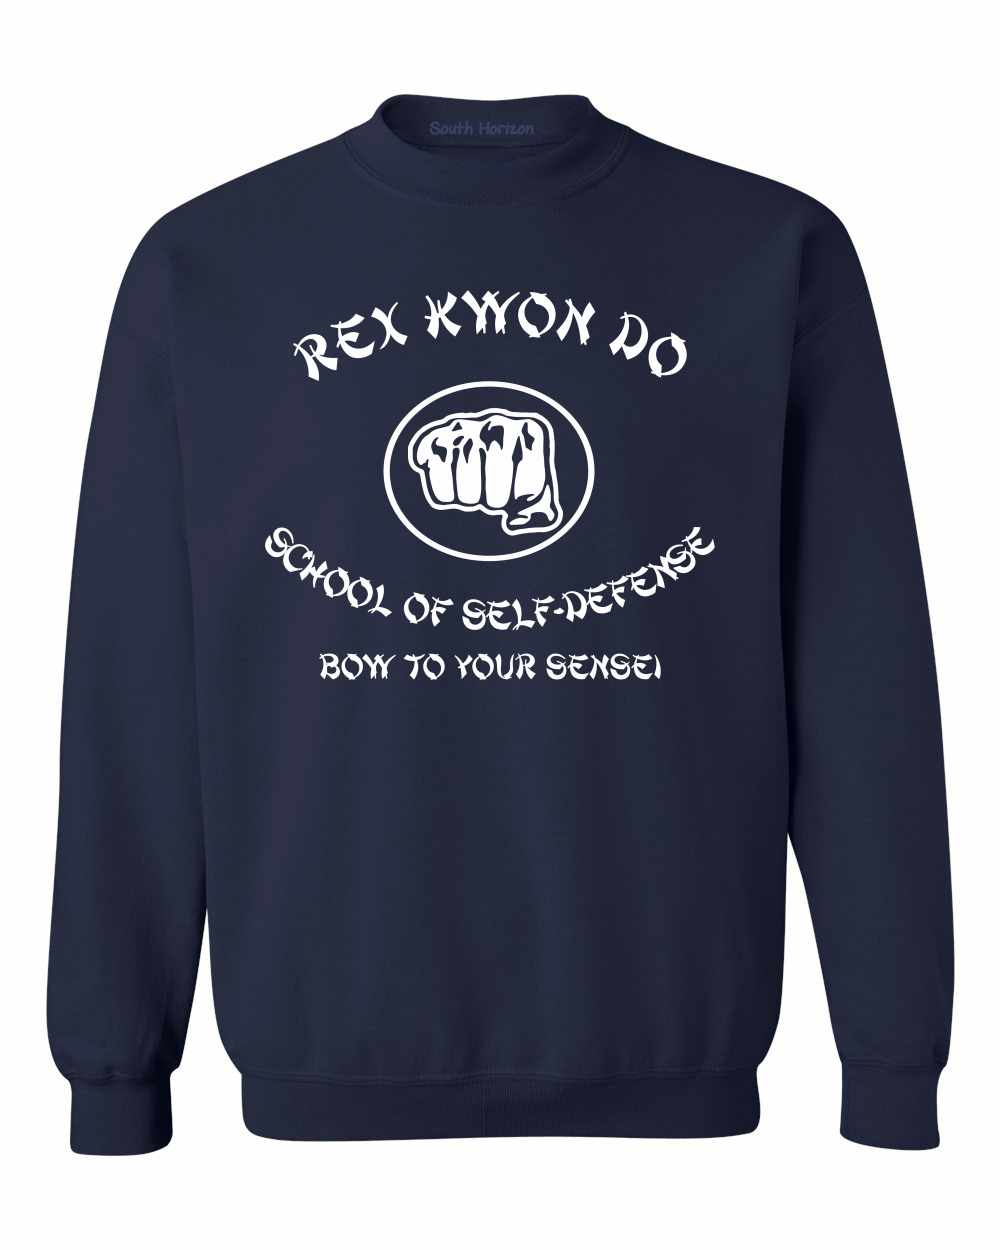 REX KWON DO SCHOOL OF SELF DEFENSE on SweatShirt (#386-11)